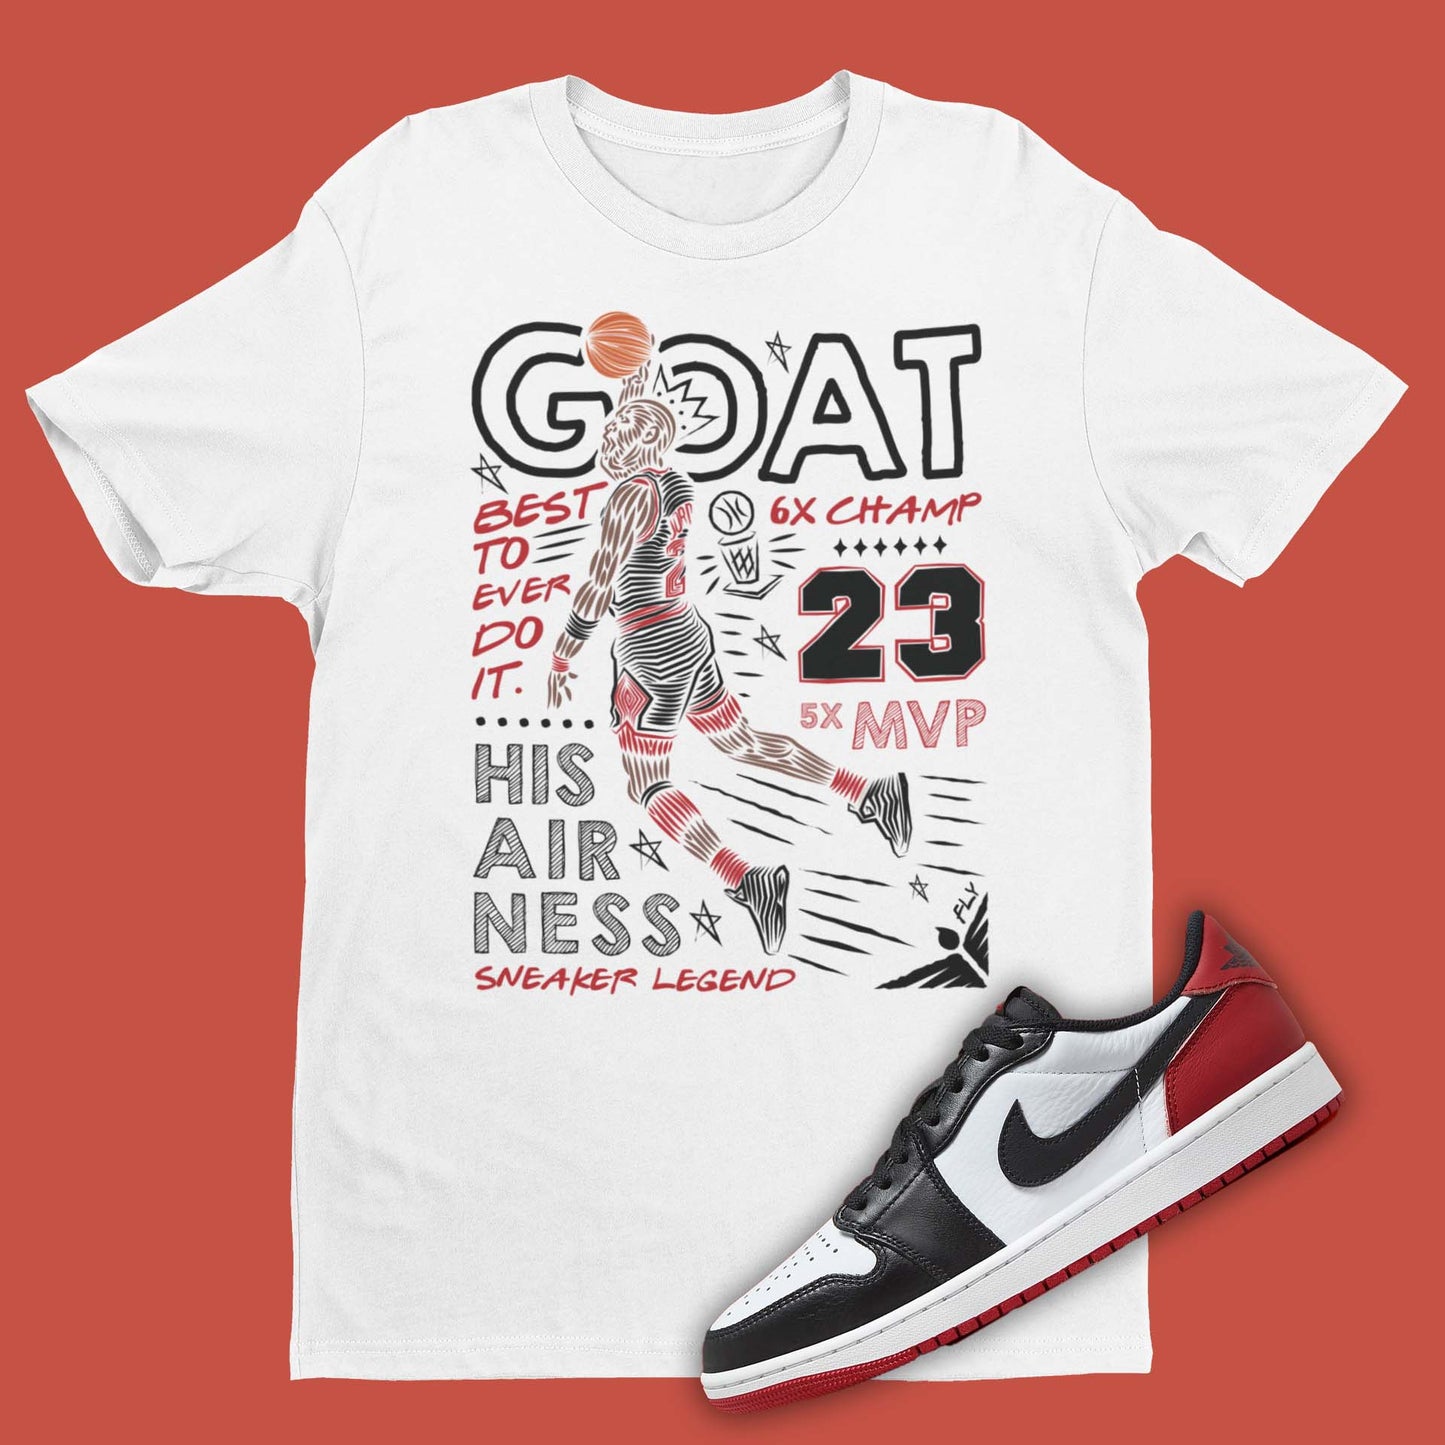 GOAT Air Jordan 1 Low Black Toe Matching T-Shirt from SNKADX